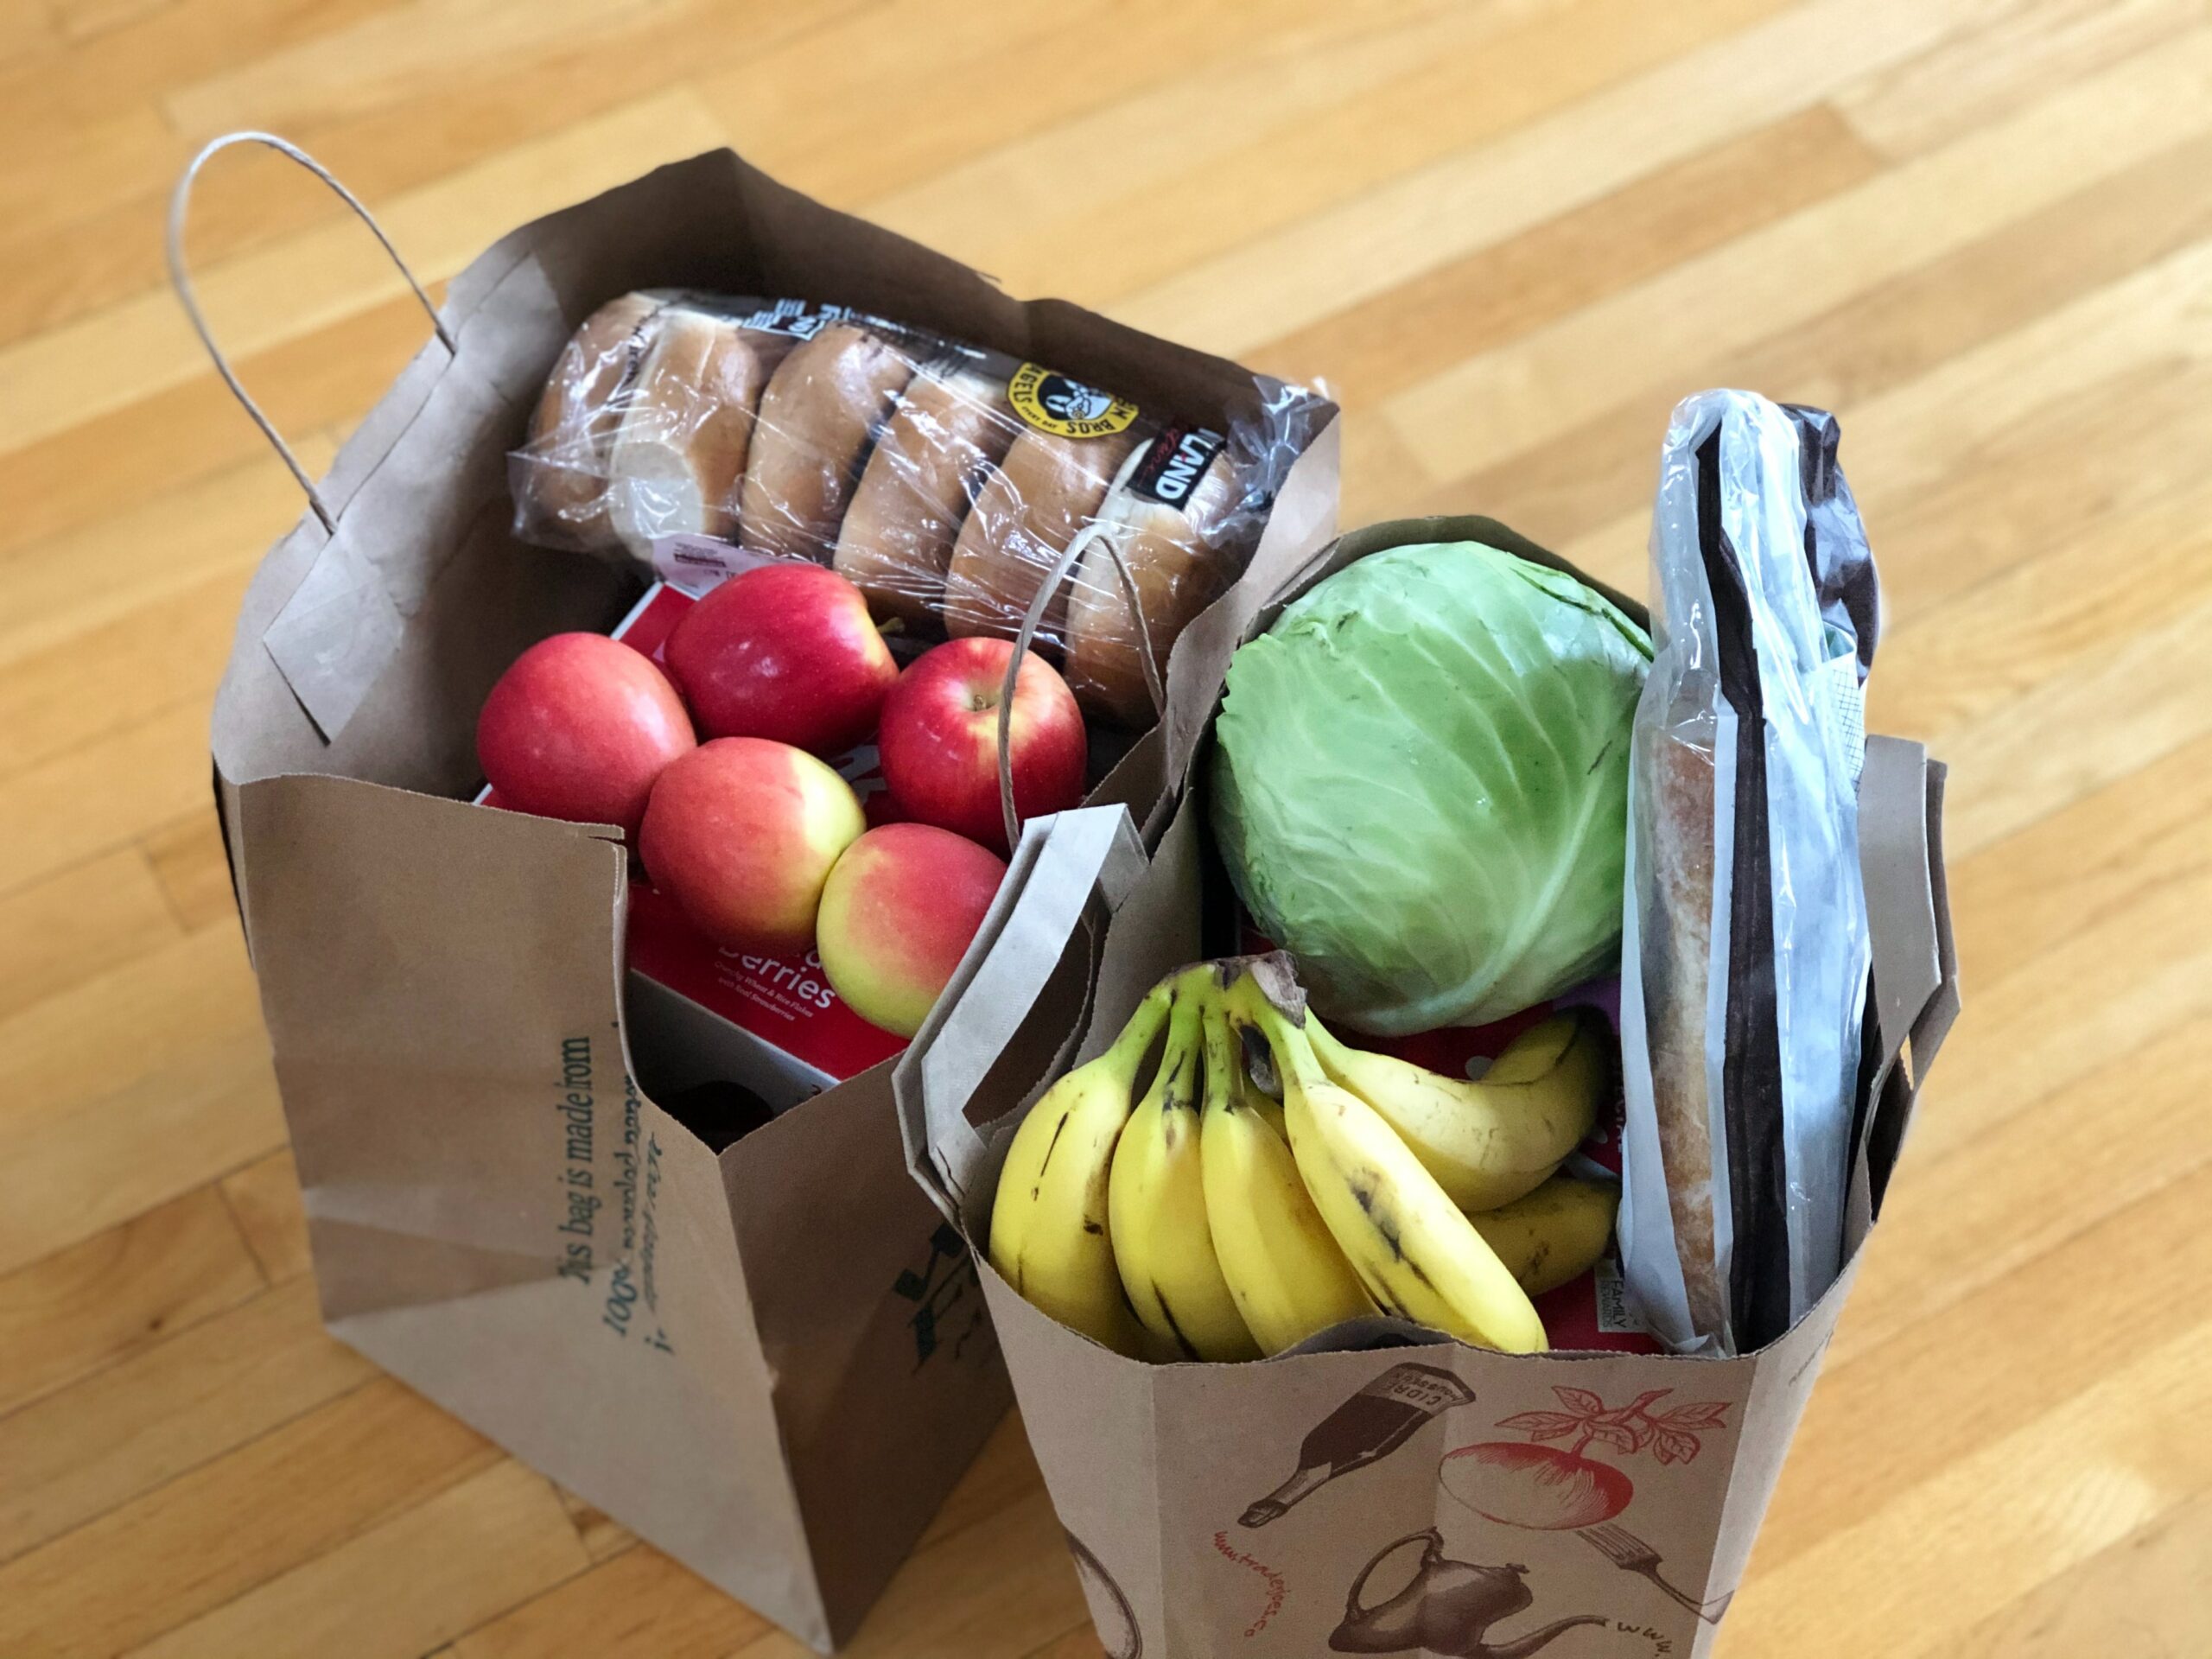 shipt grocery shopper opportunity in Providence, RI